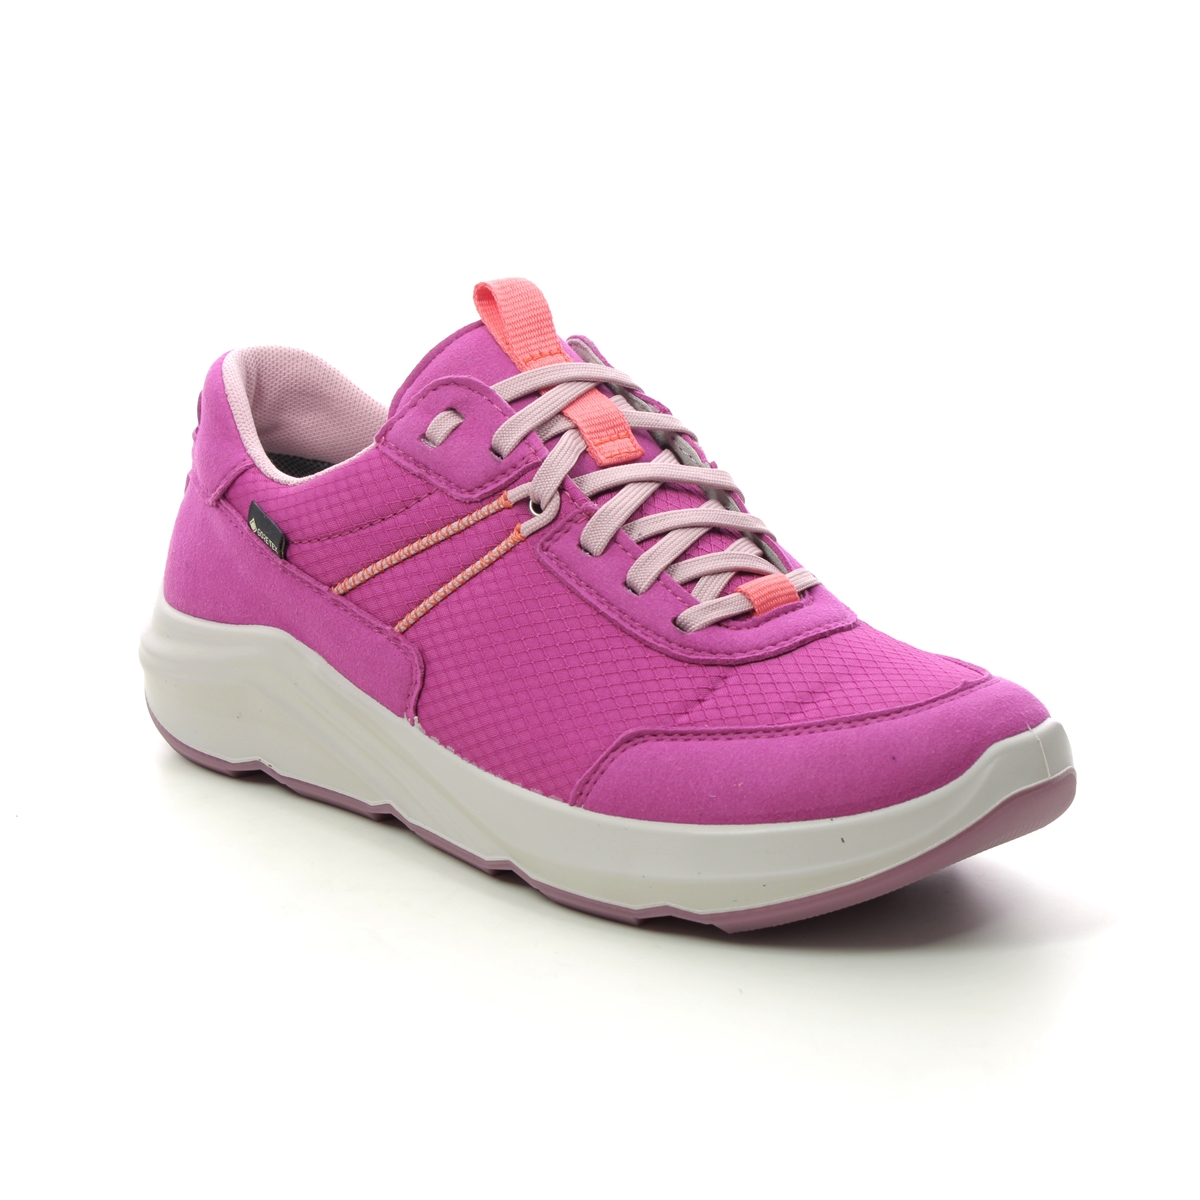 Legero Bliss Gtx Wide Fuchsia Womens Walking Shoes 2000318-5670